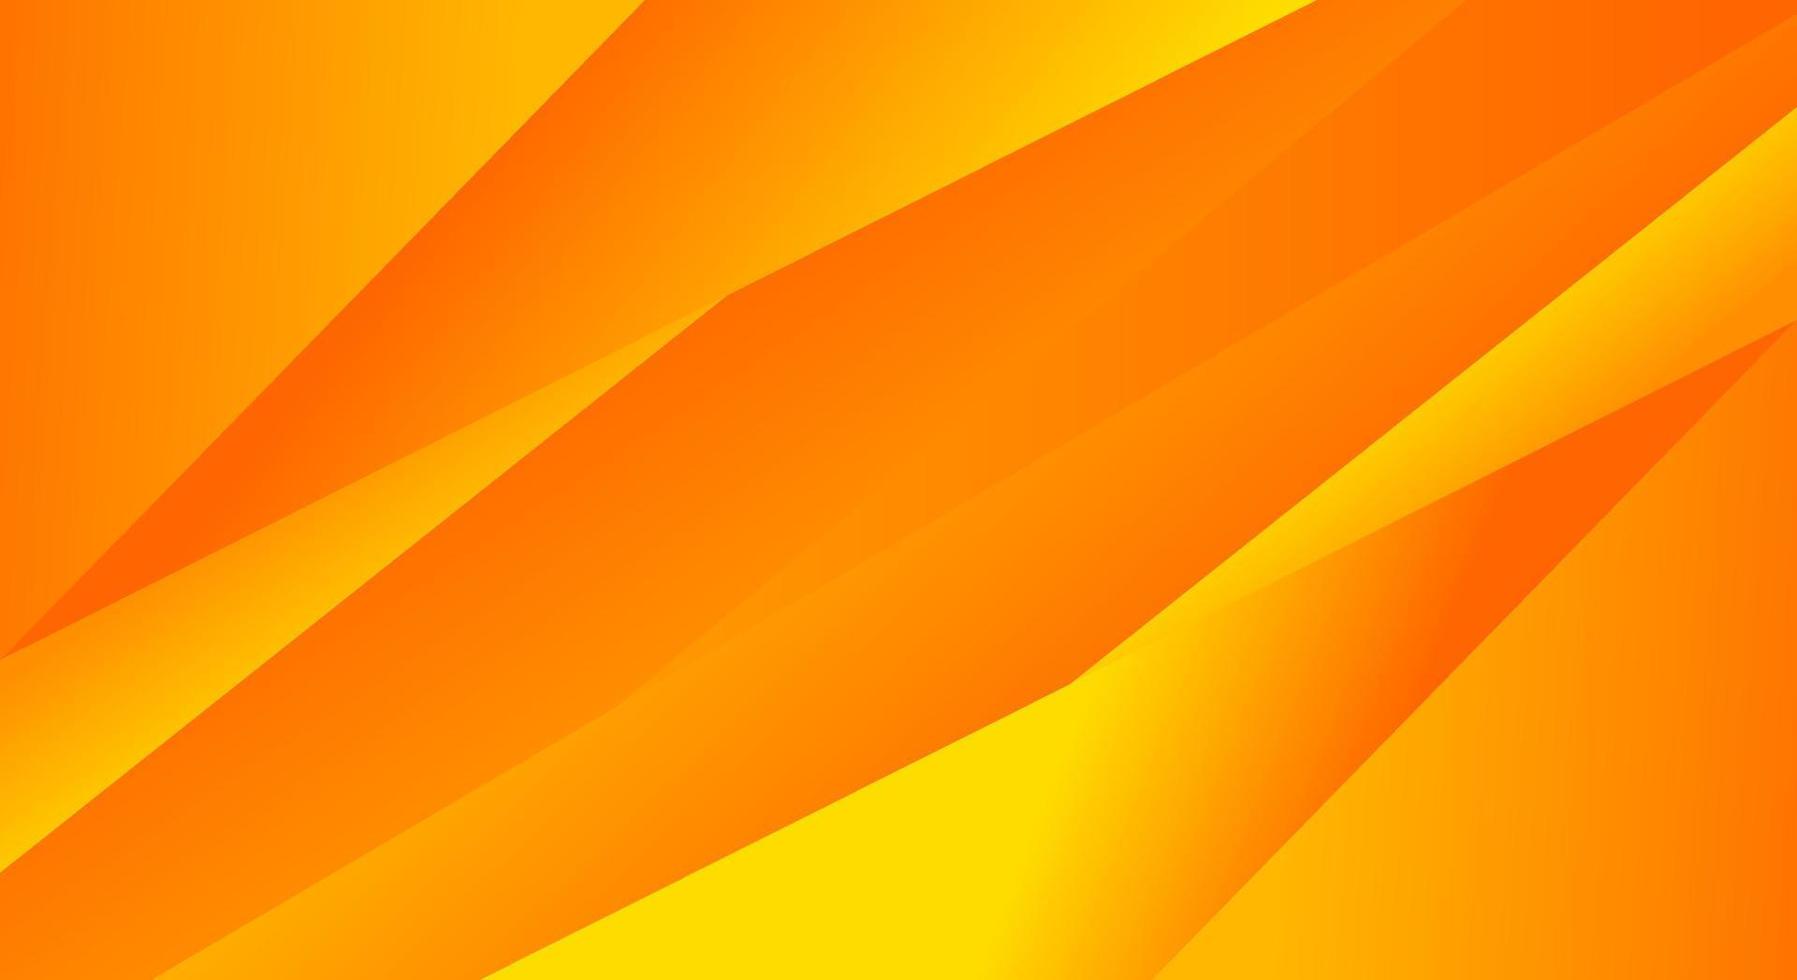 Abstract orange modern background vector